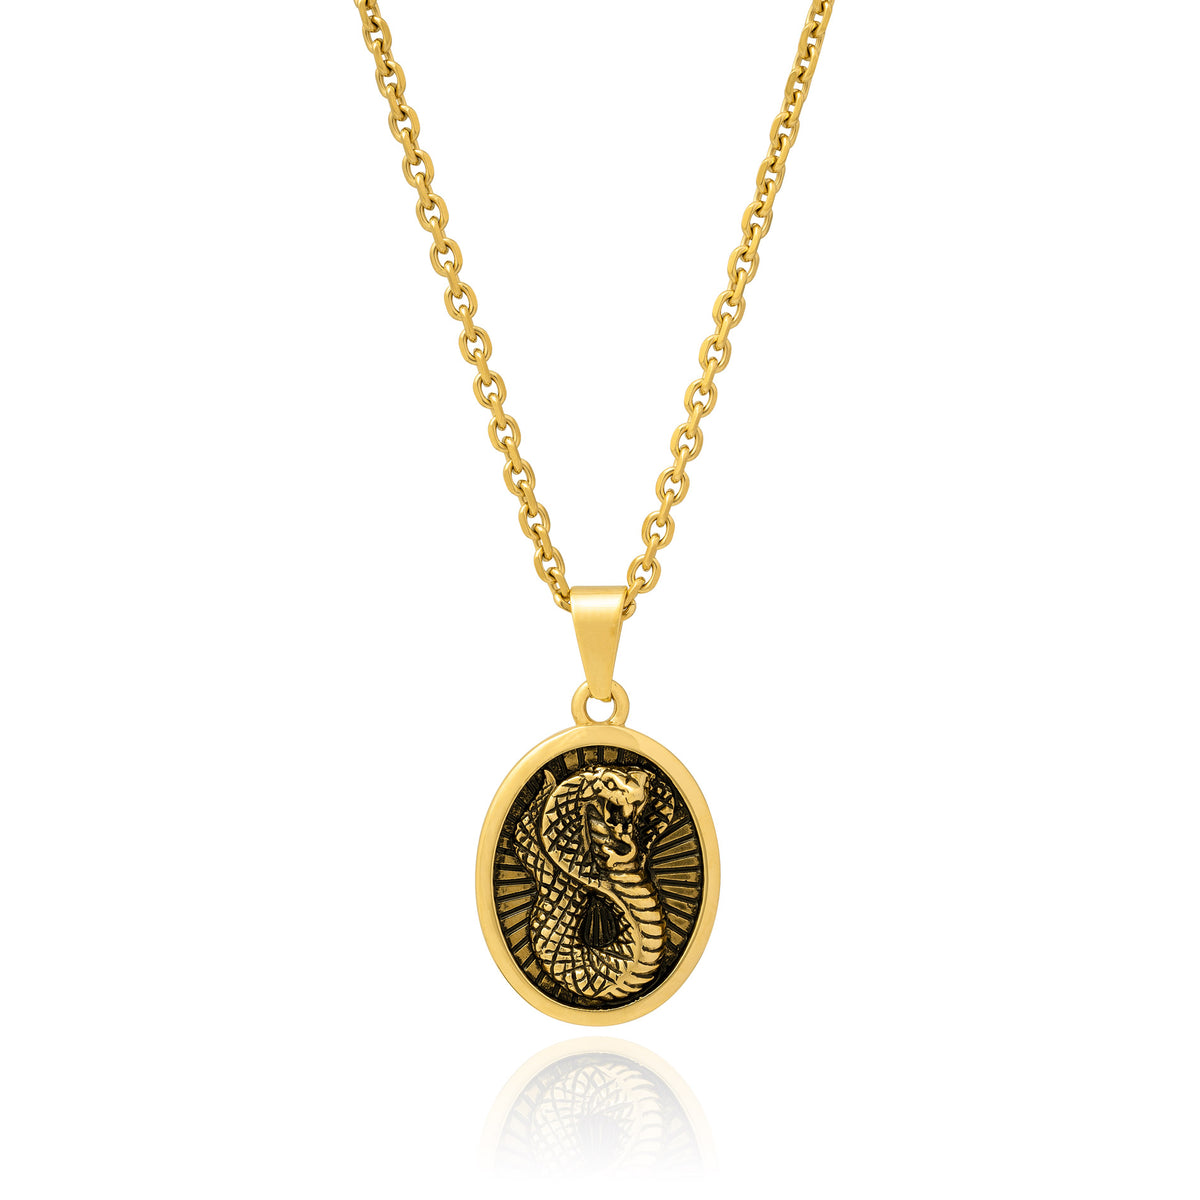 Alternate angle of gold snake pendant necklace